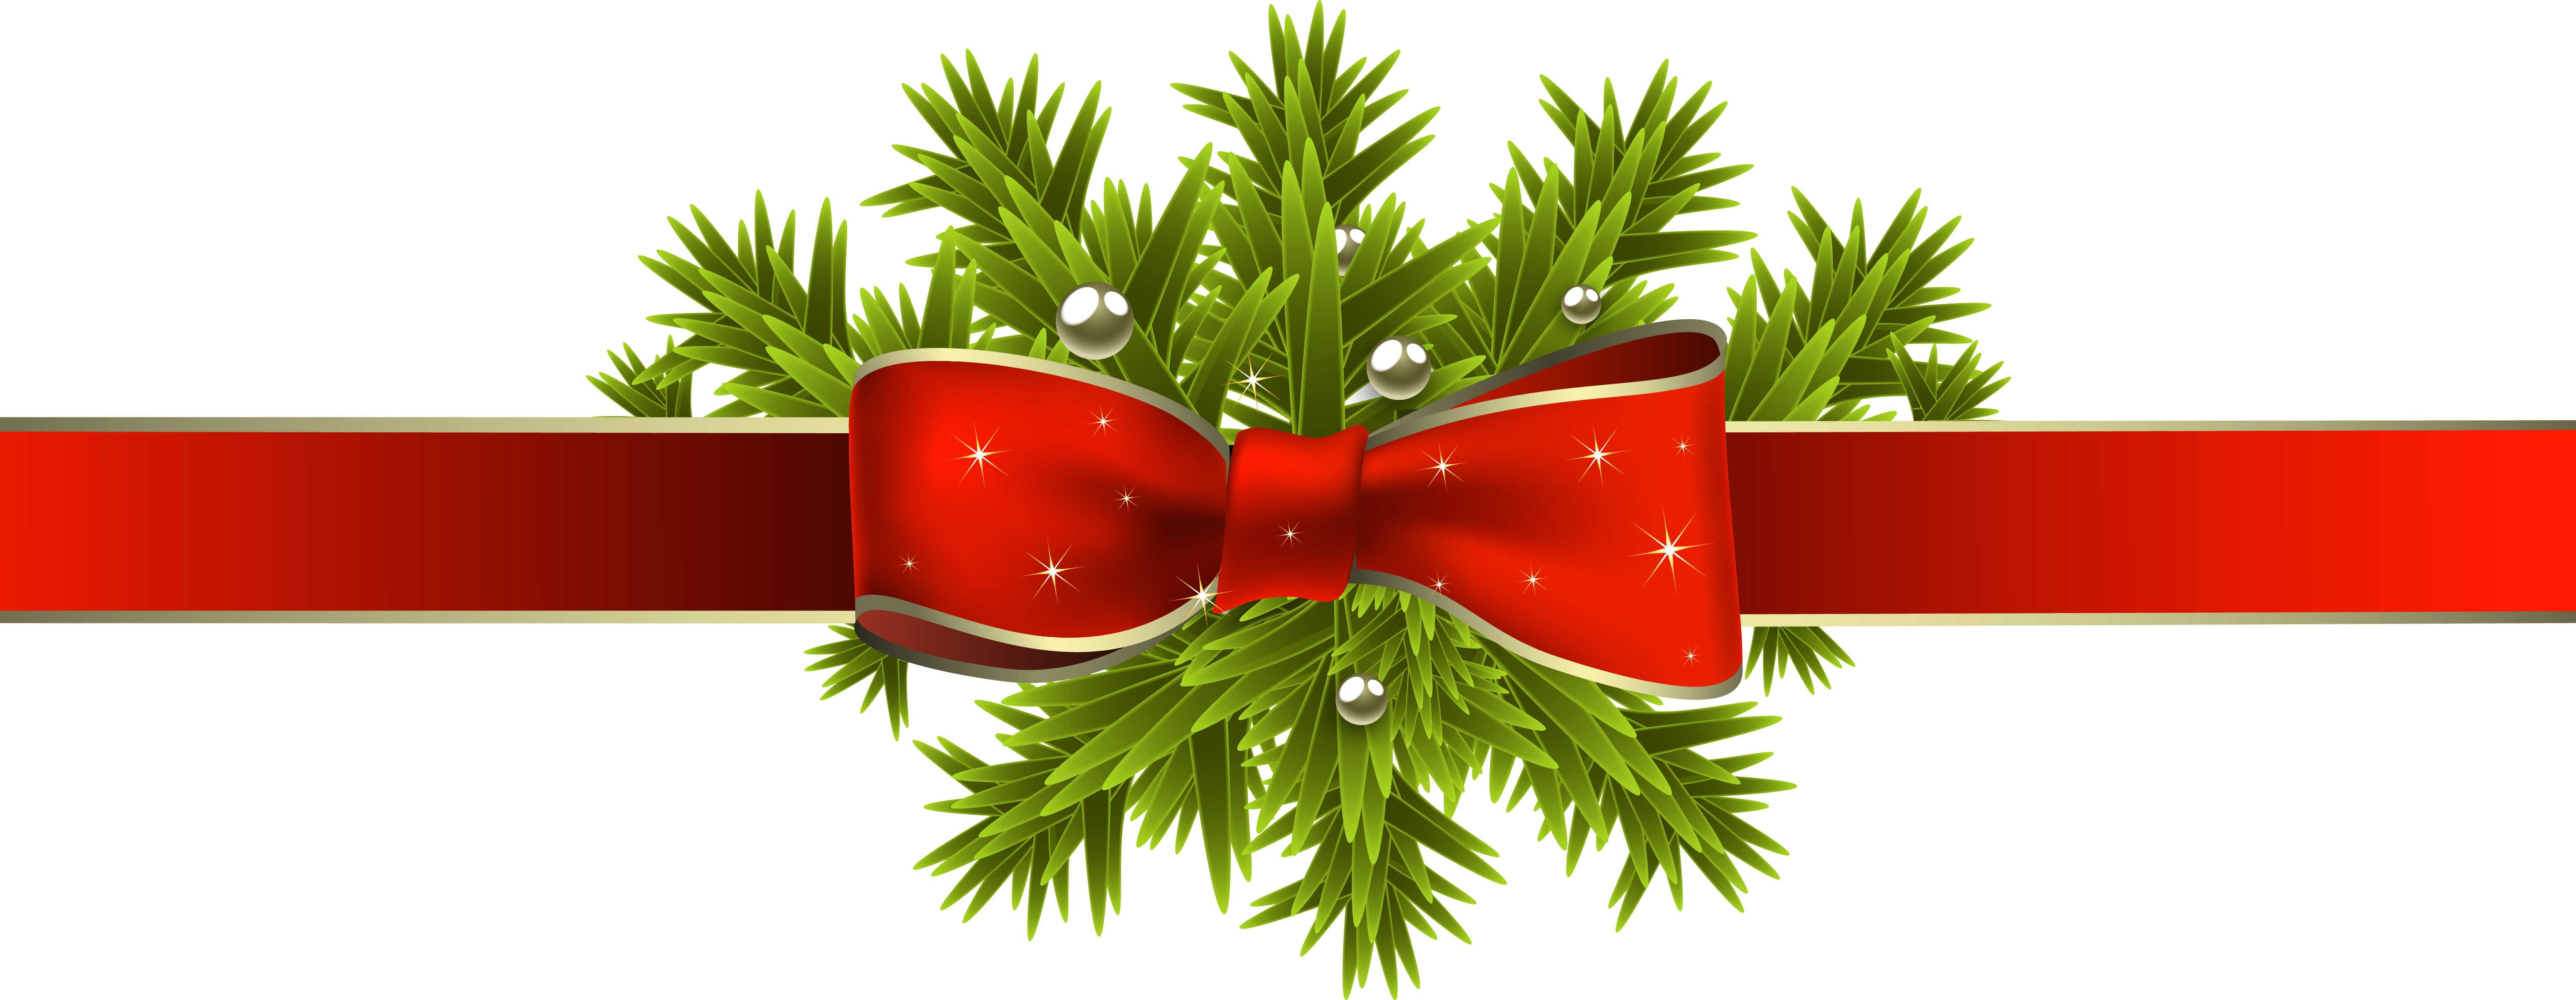 Free Christmas Ribbon Cliparts, Download Free Clip Art ...